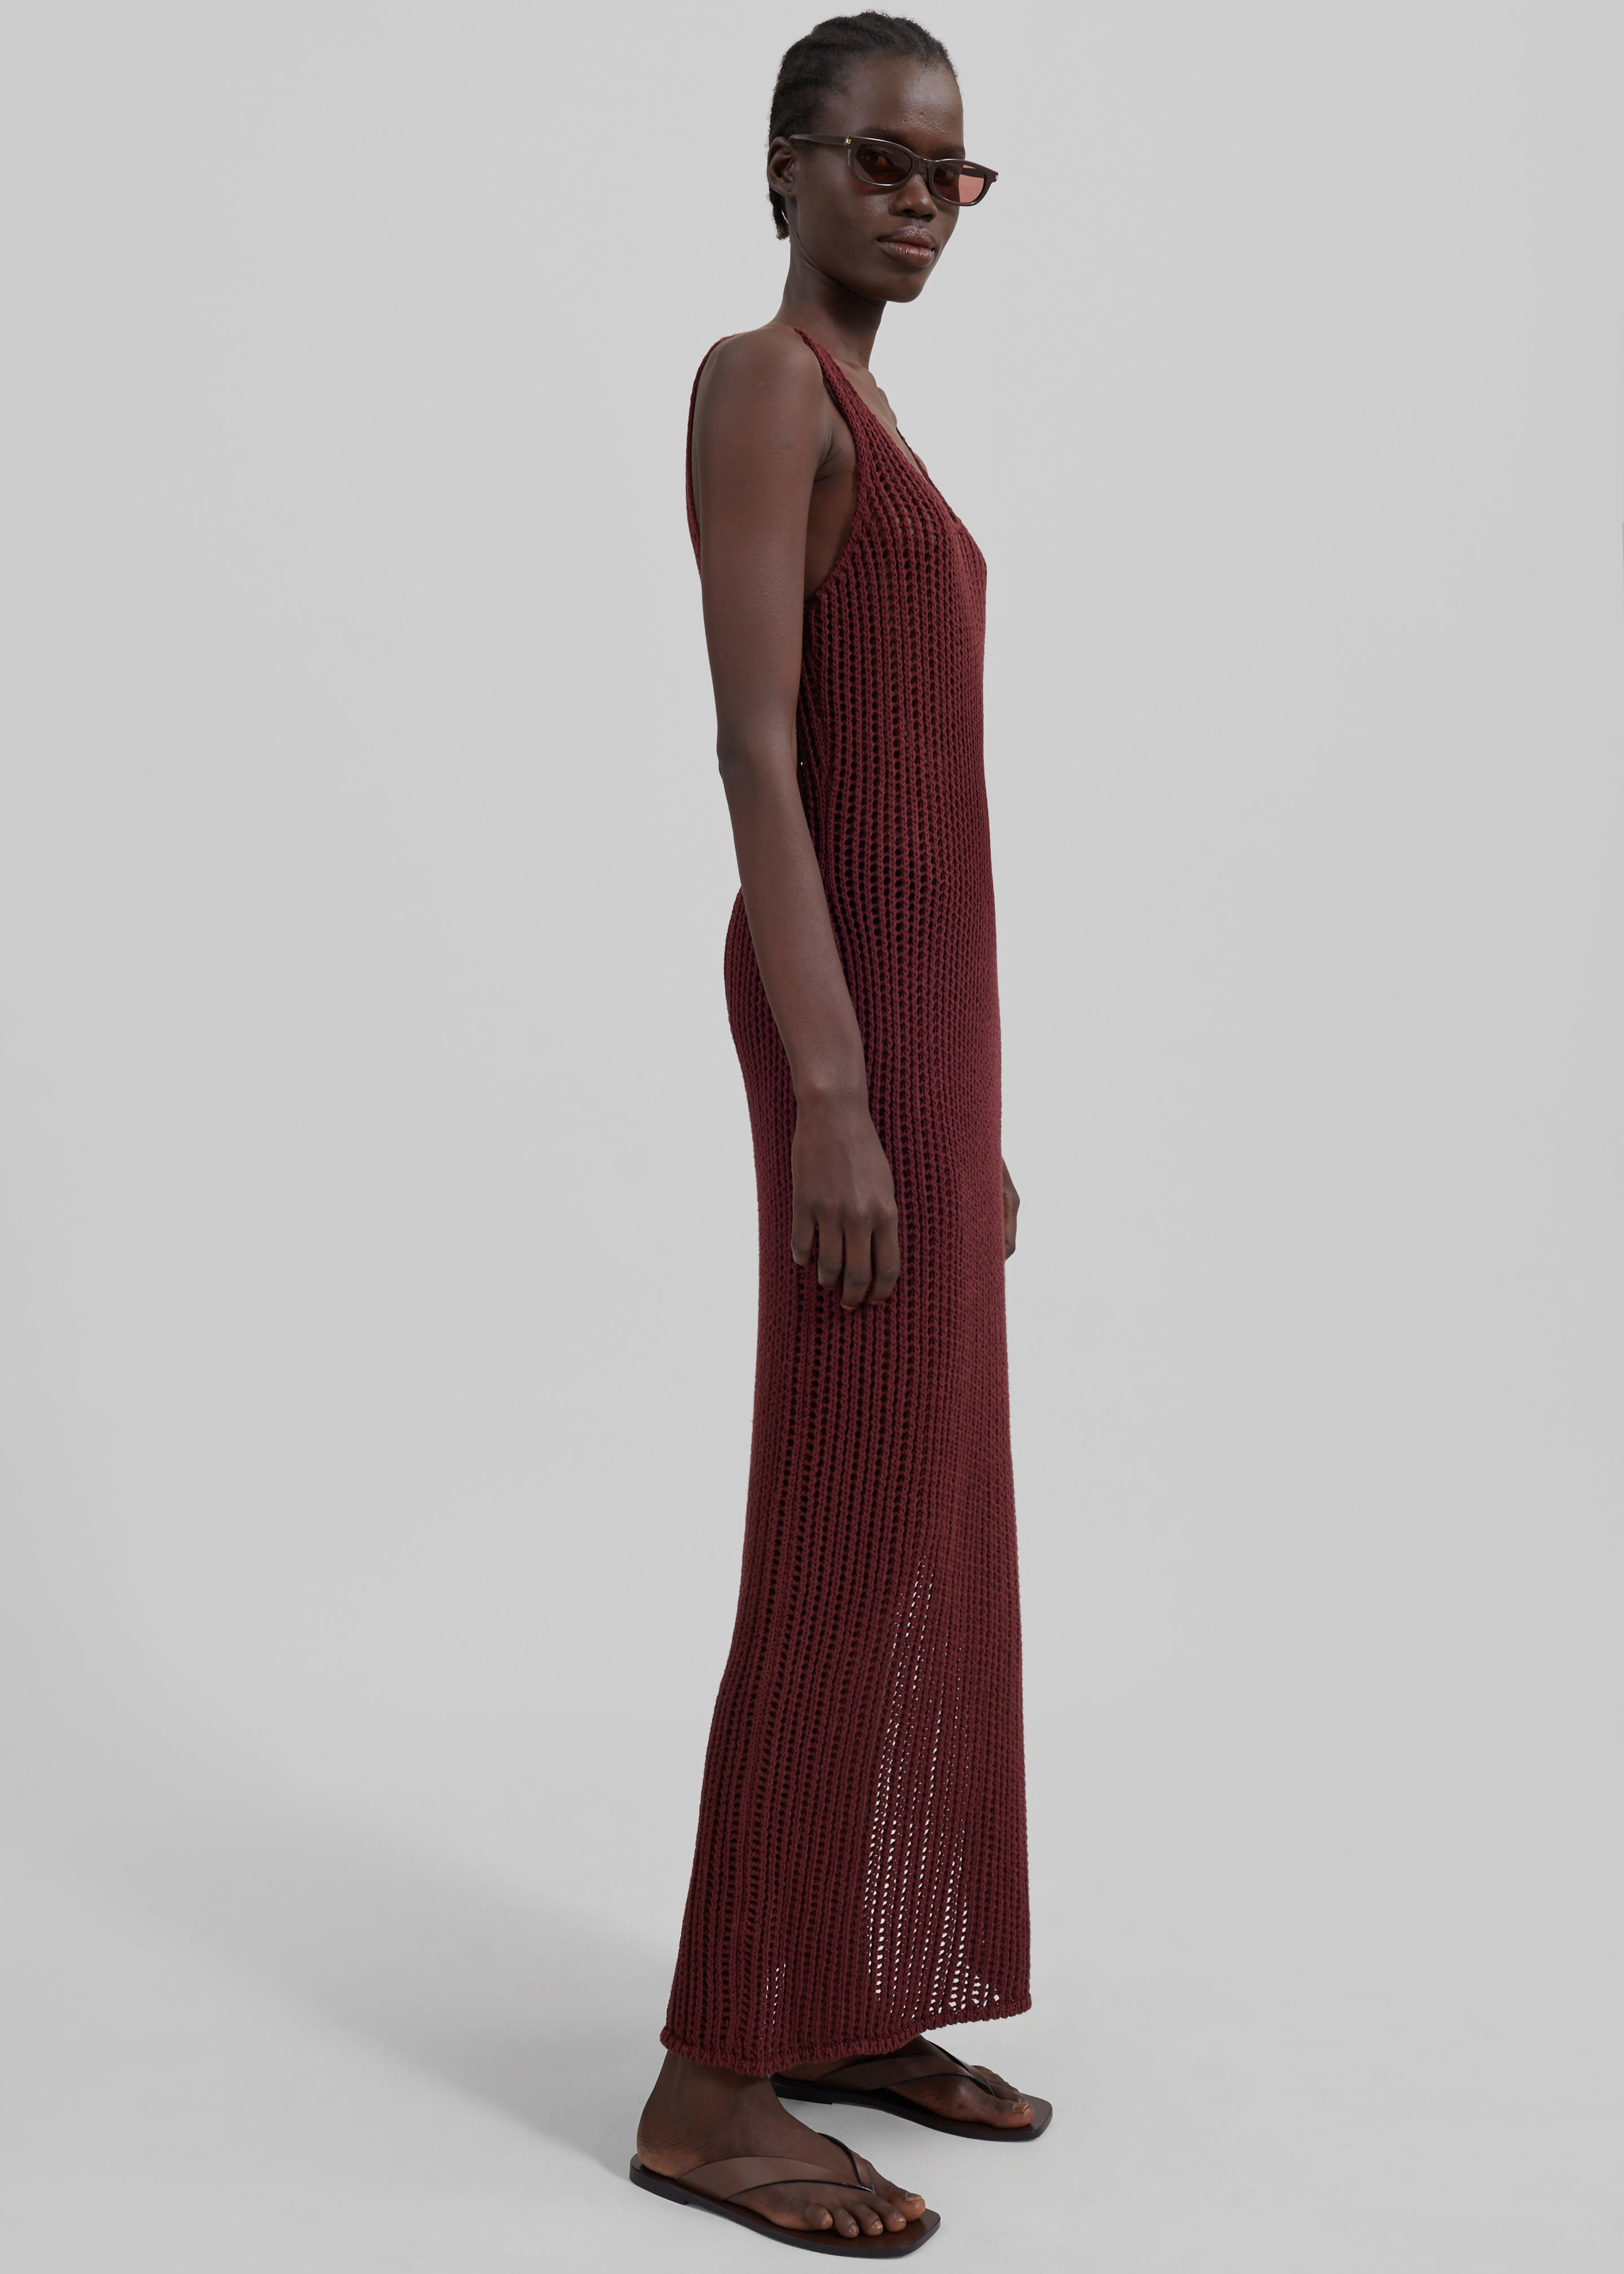 Adrienna Crochet Maxi Dress - Burgundy - 3